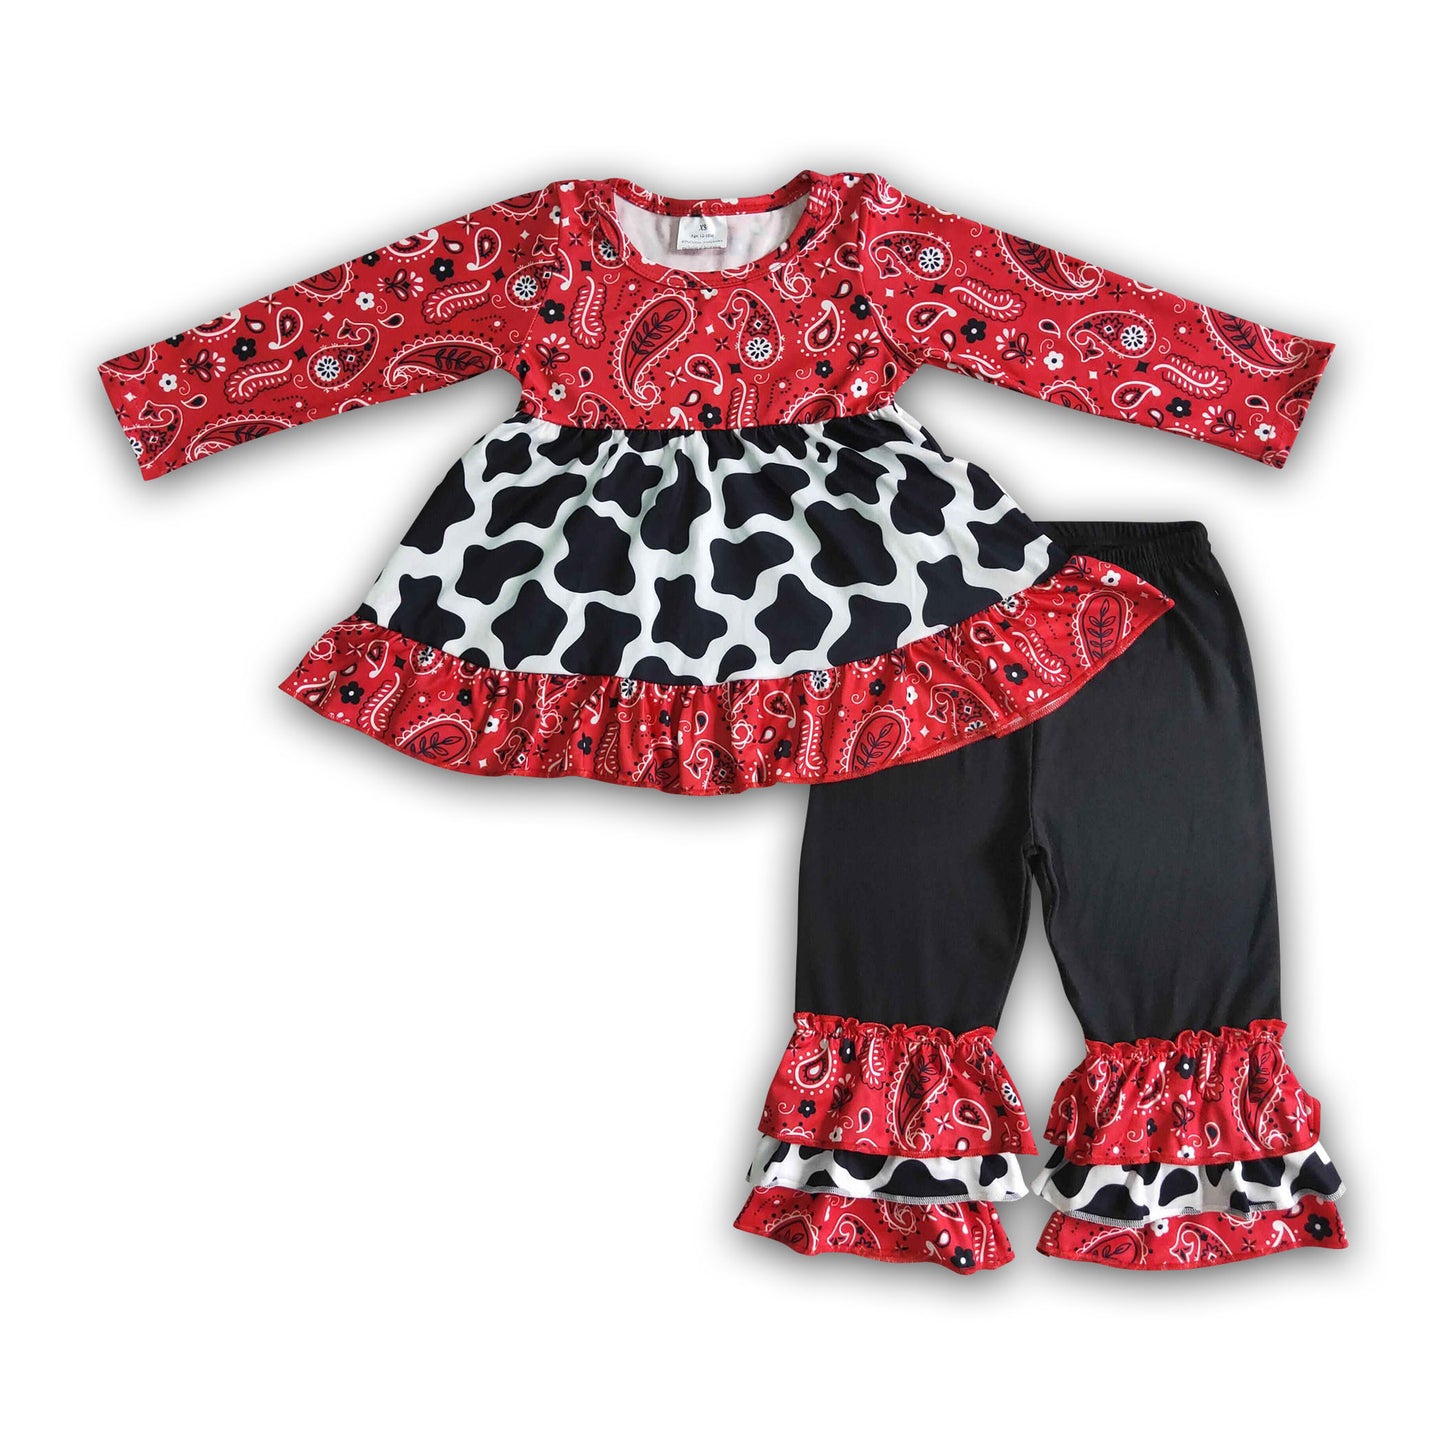 Paisley cow print tunic ruffle pants girls clothing set